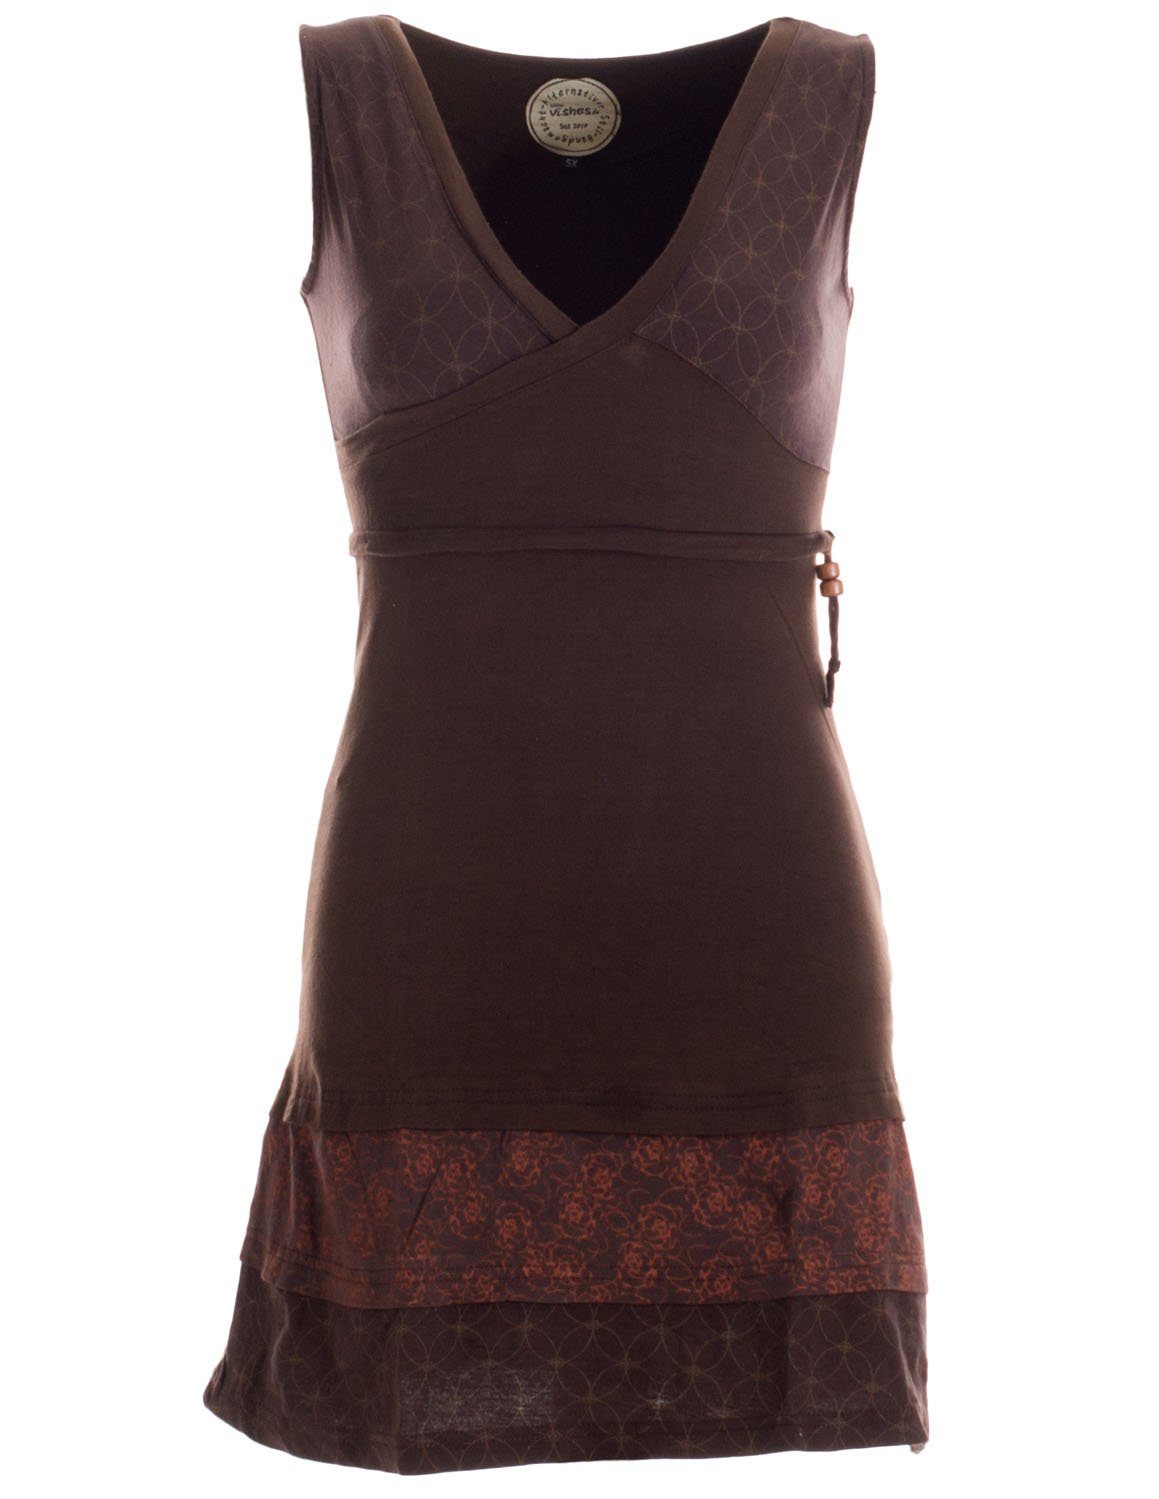 Vishes Sommerkleid Kurzes ärmelloses mini Sommerkleid bedruckt Tunika Elfen, Hippie, Goa, Ethno Style braun